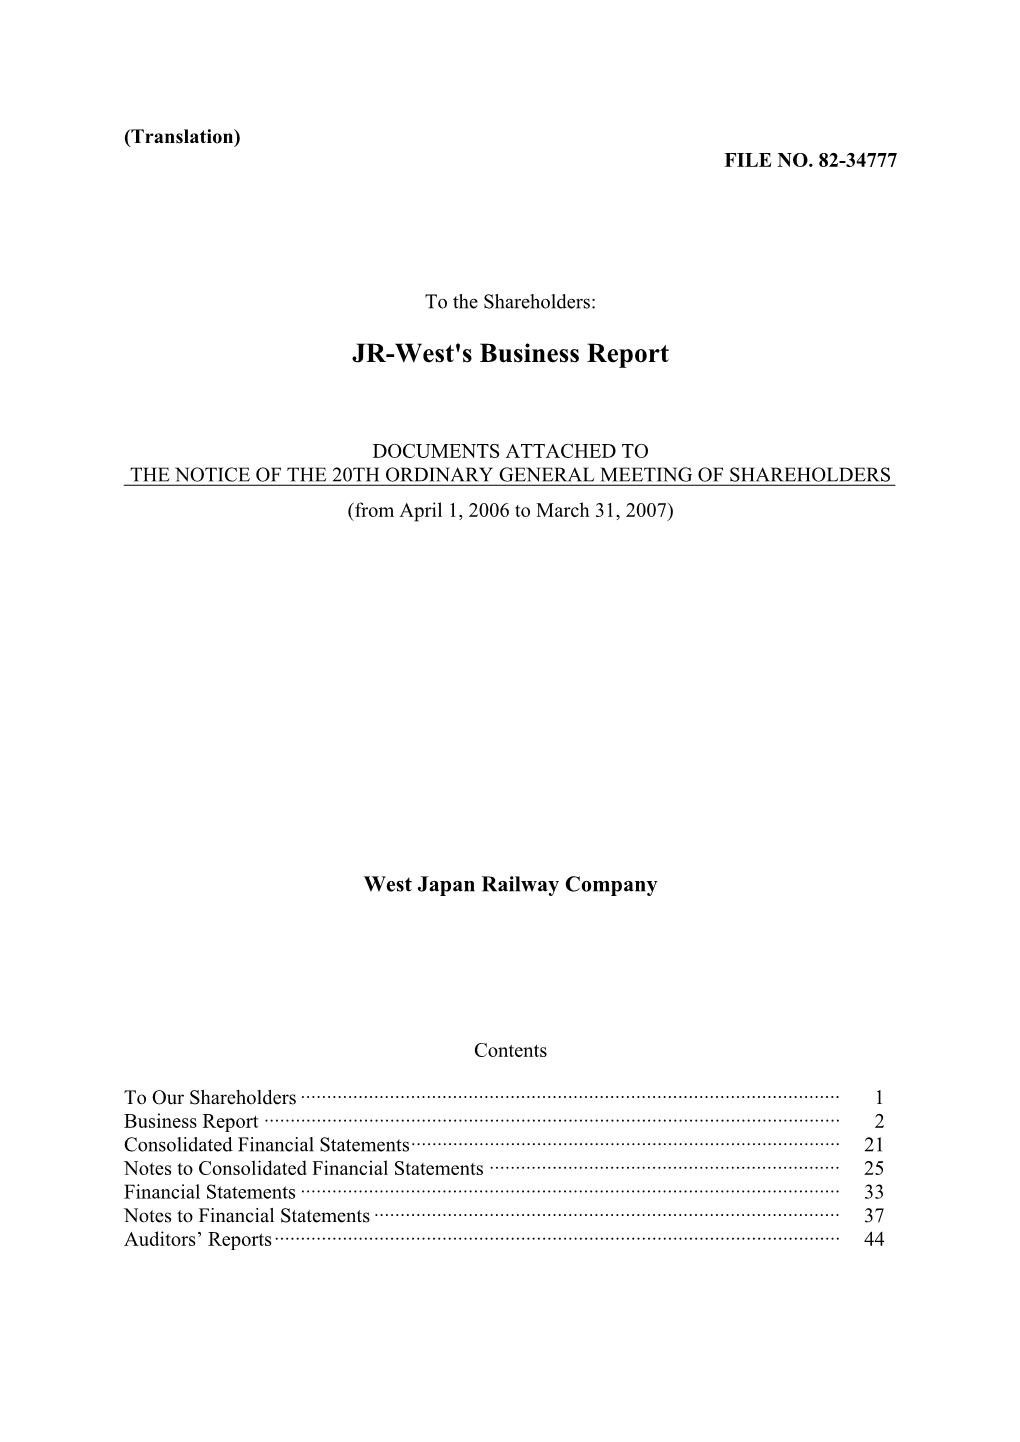 JR-West's Business Report